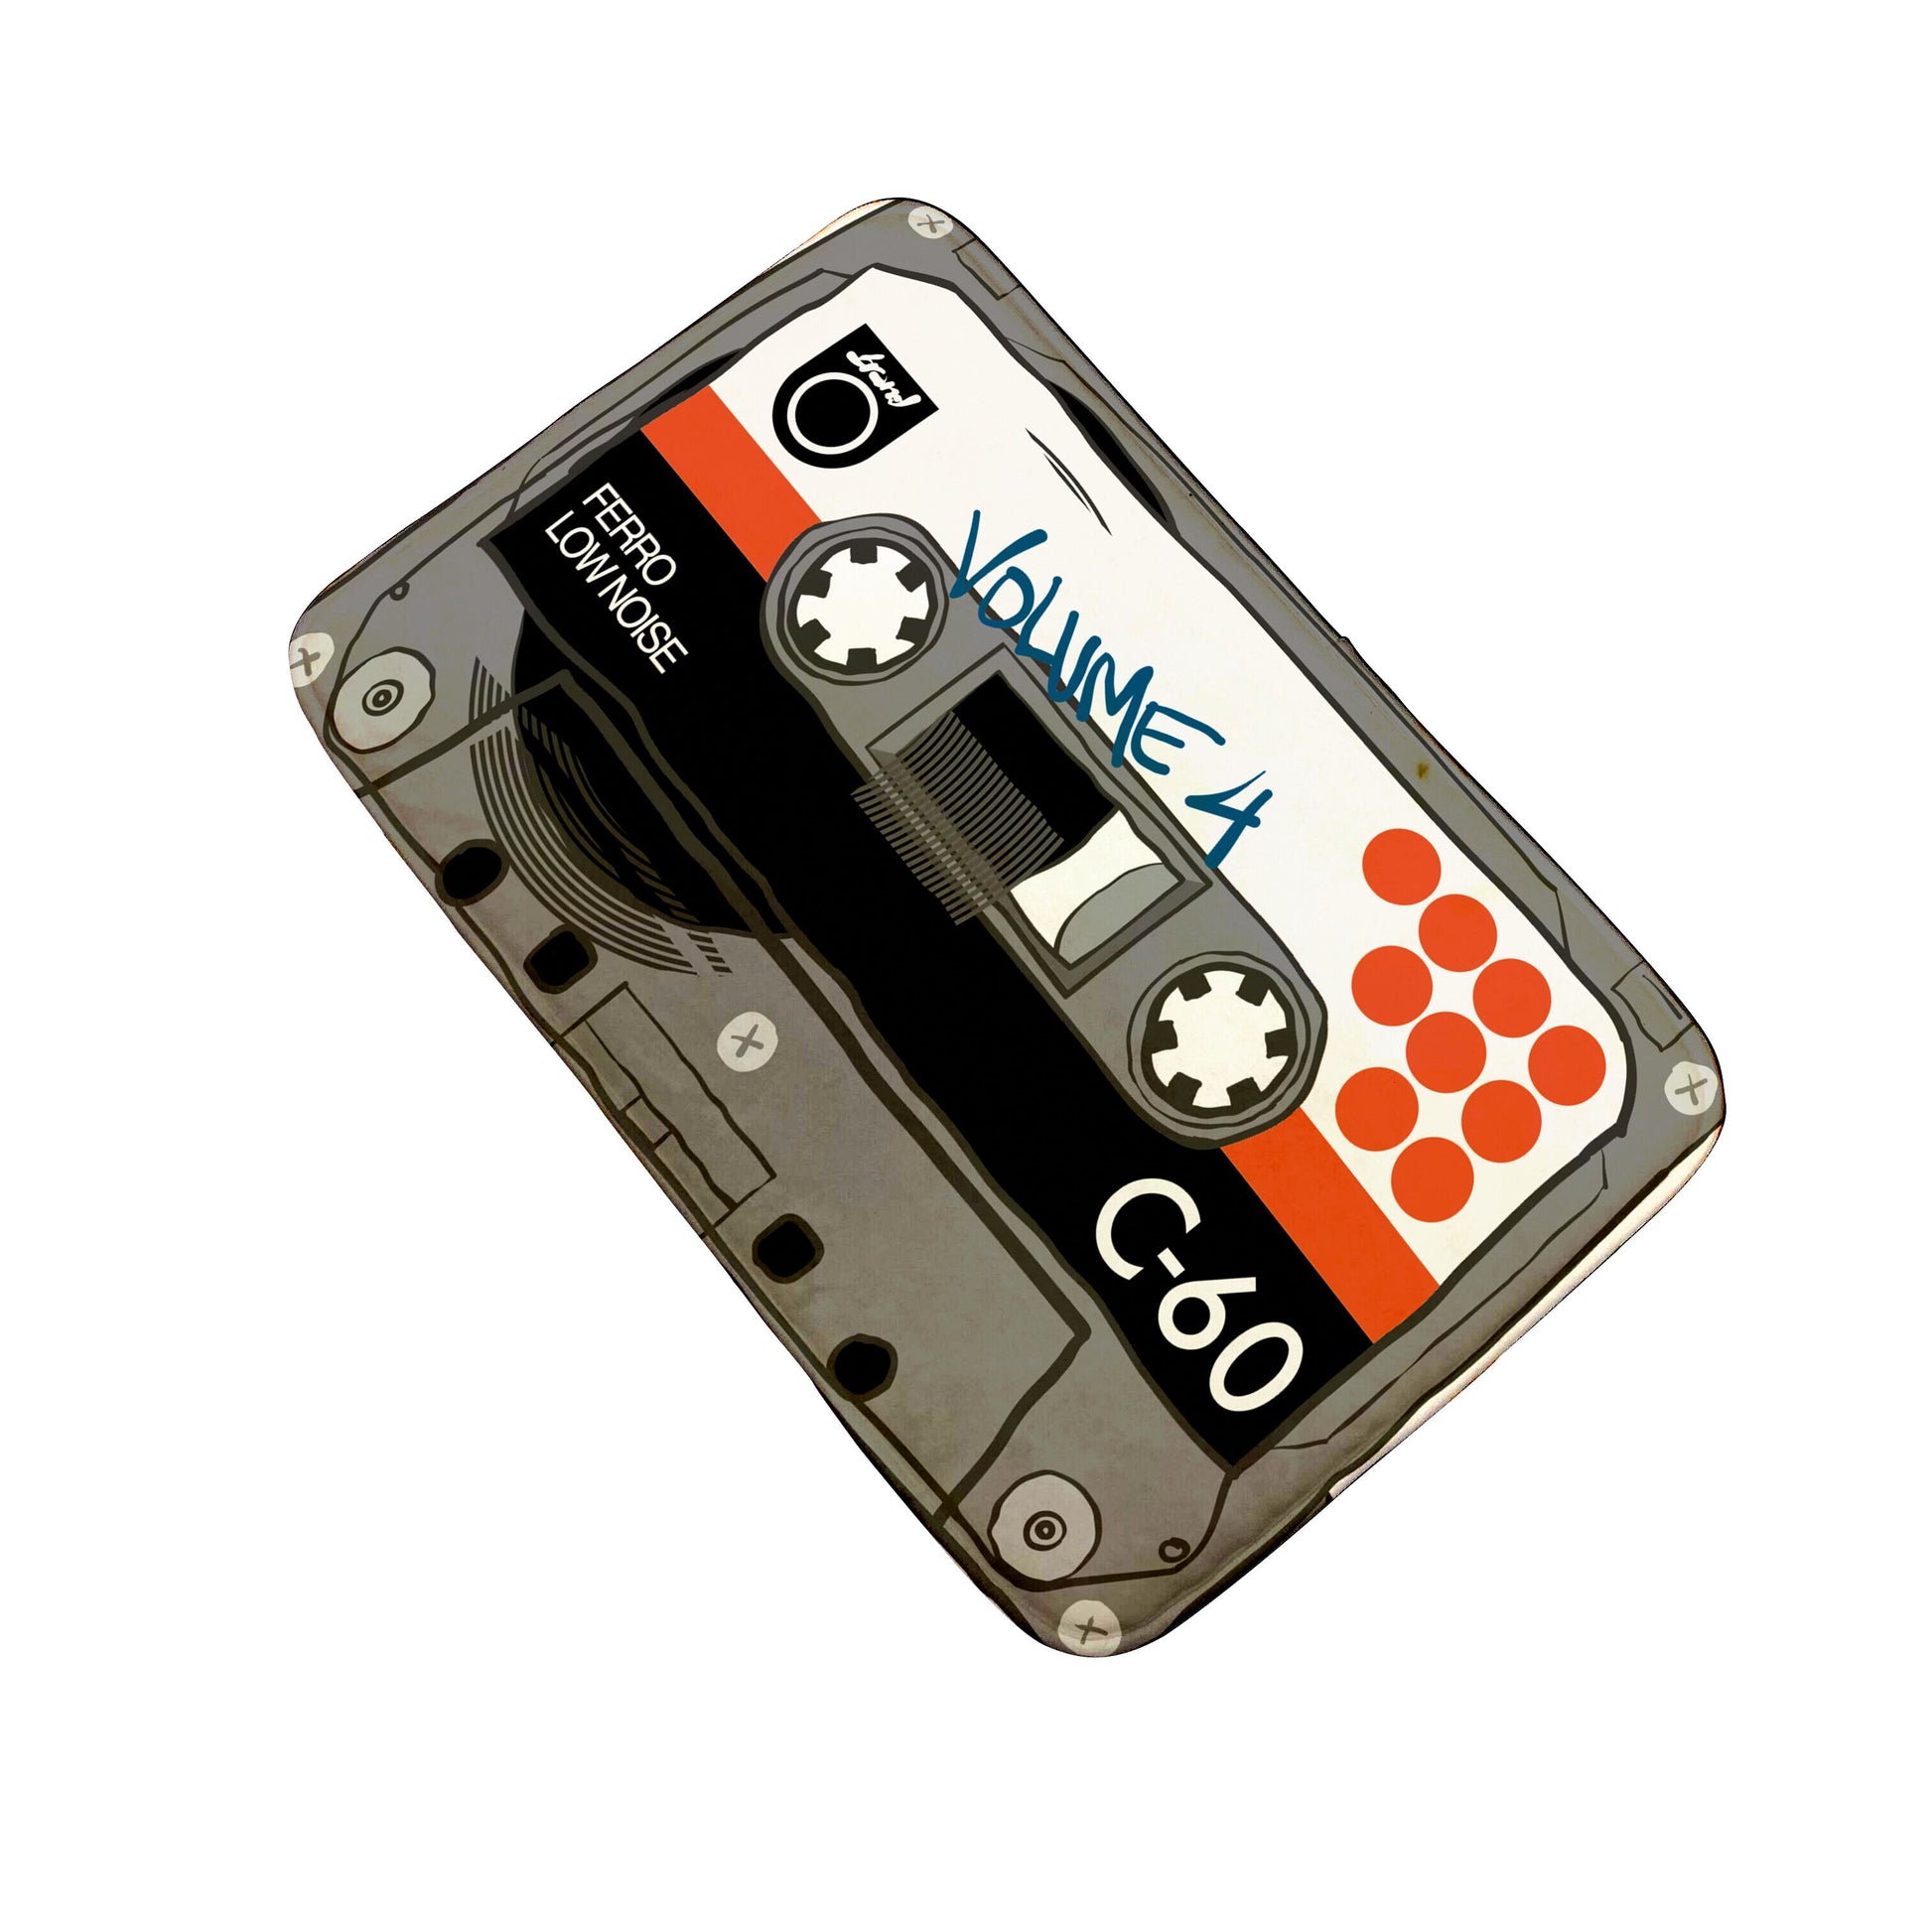 TEEK - A Bunch of Cassette Tape Rugs HOME DECOR theteekdotcom 1 15.75x23.62in 20-25 days